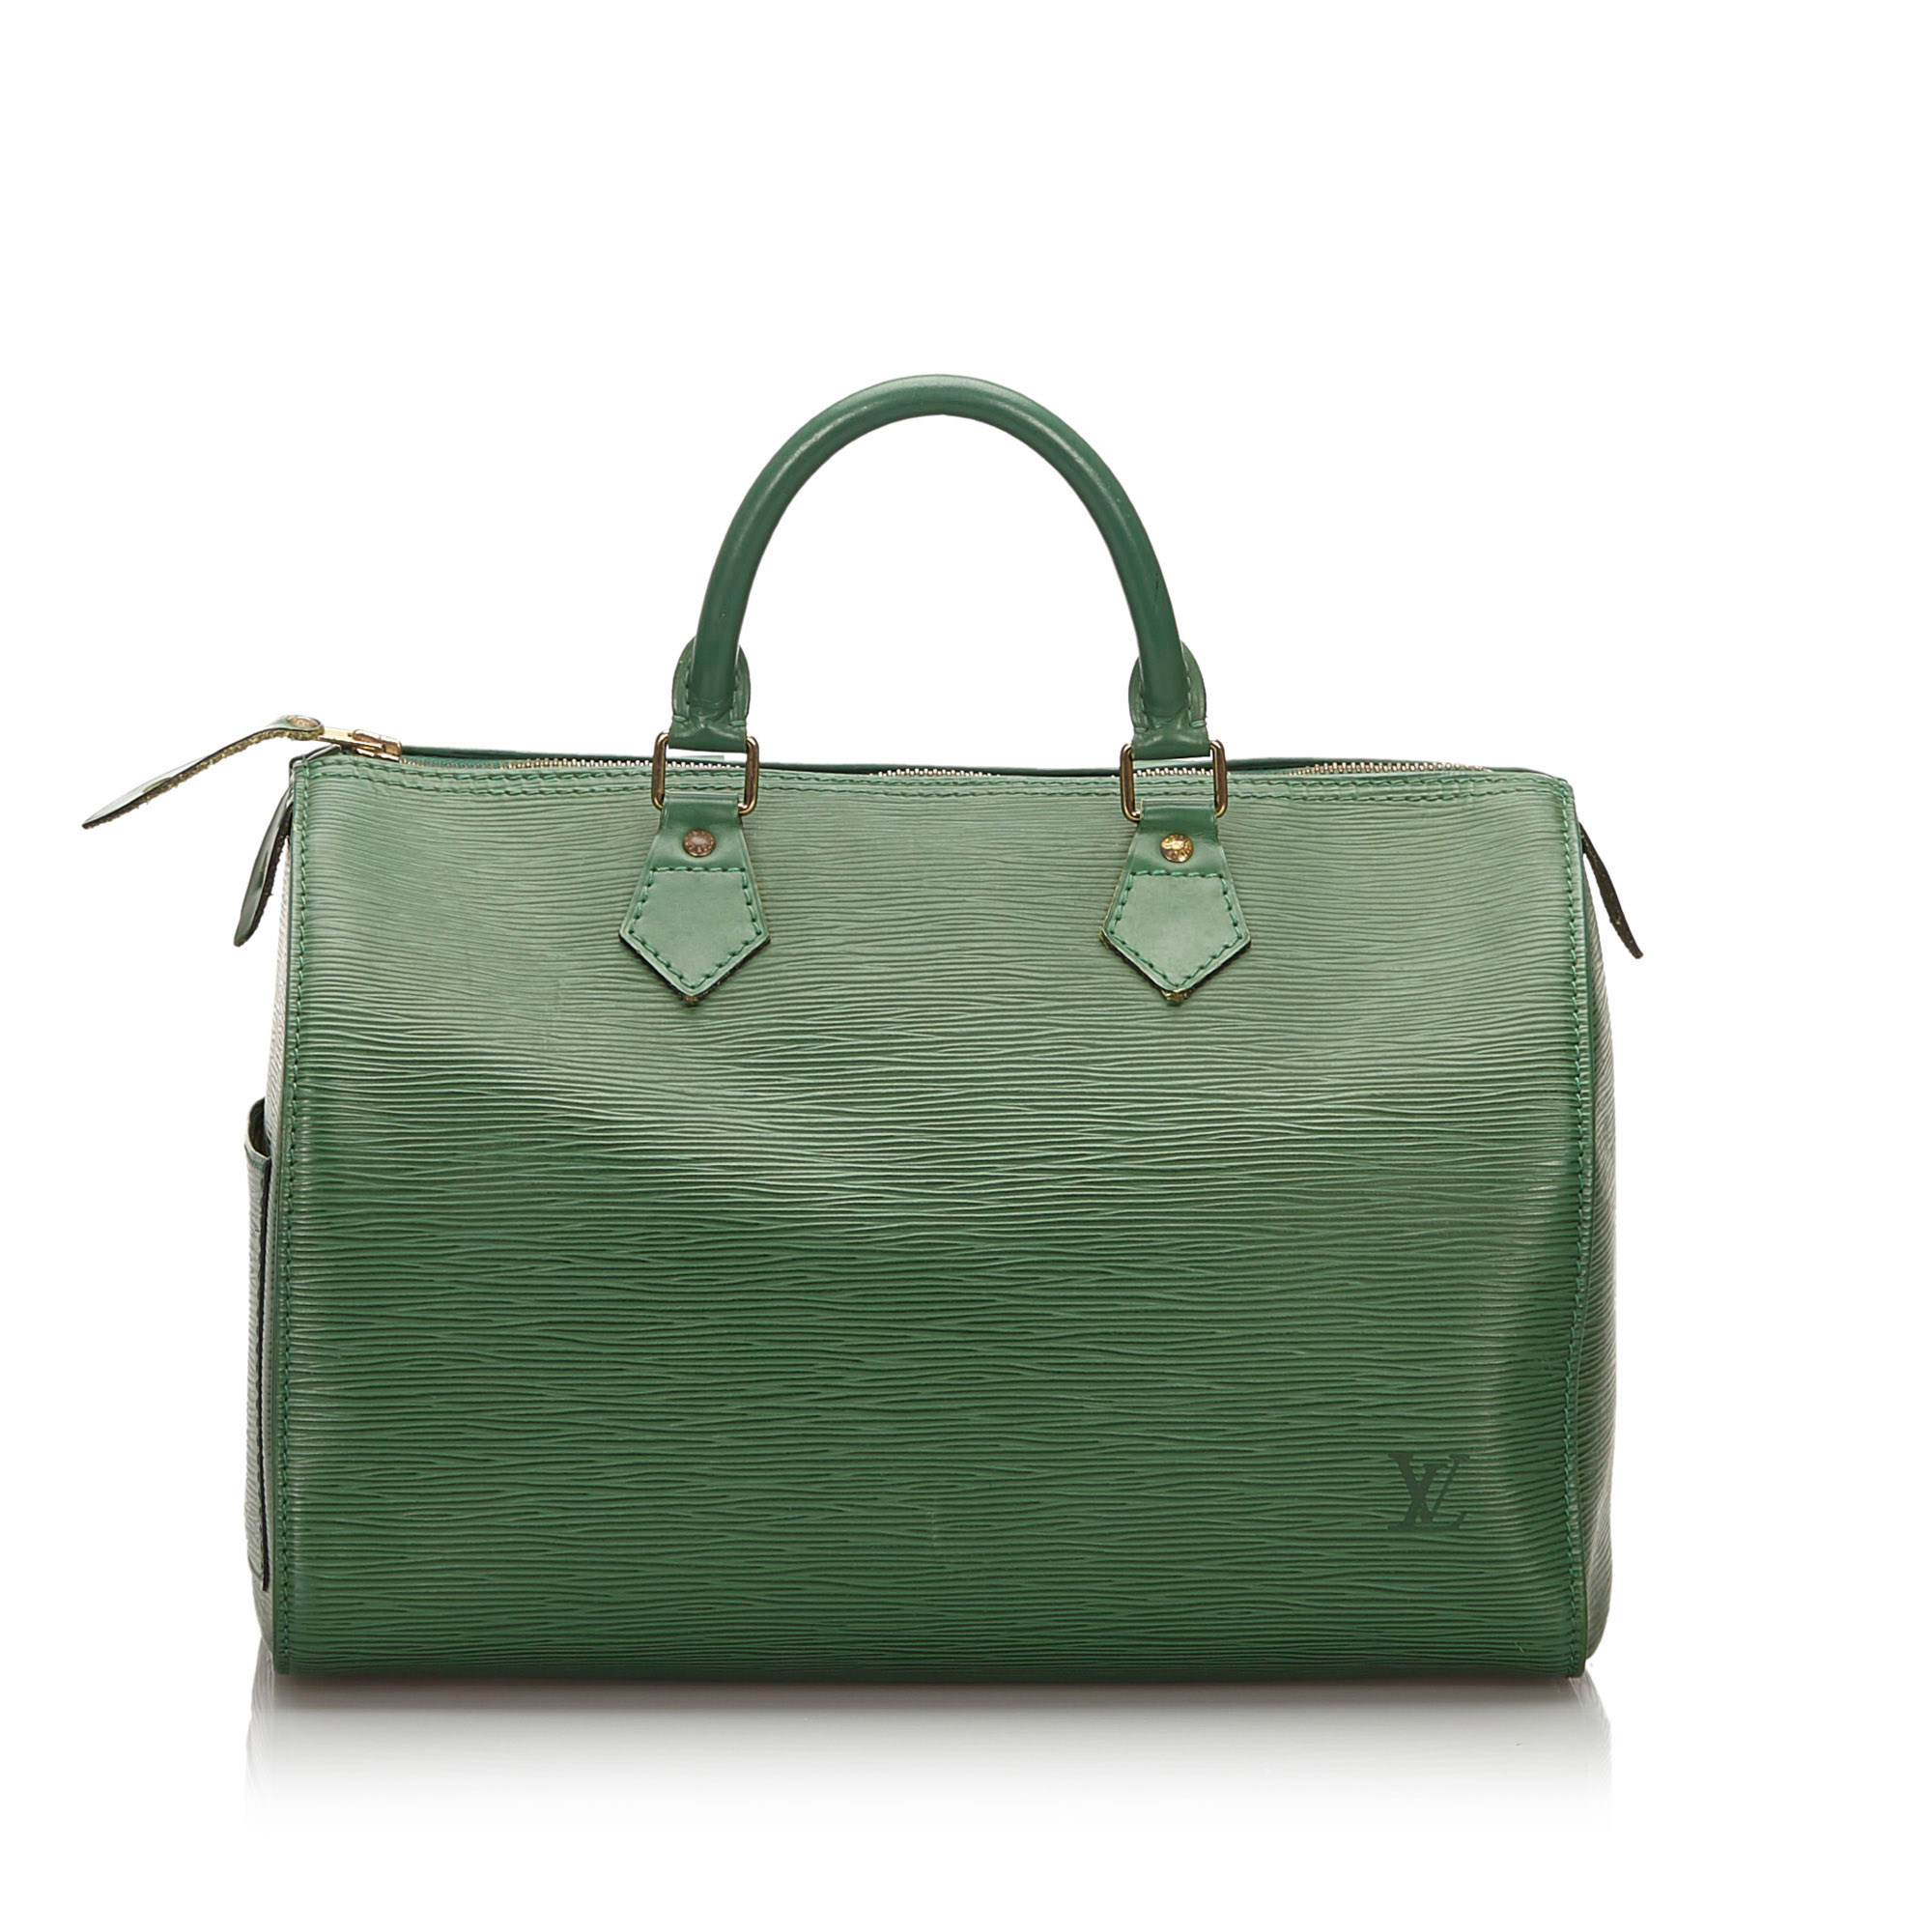 Pre-Loved Louis Vuitton Green Epi Leather Speedy 30 France | eBay